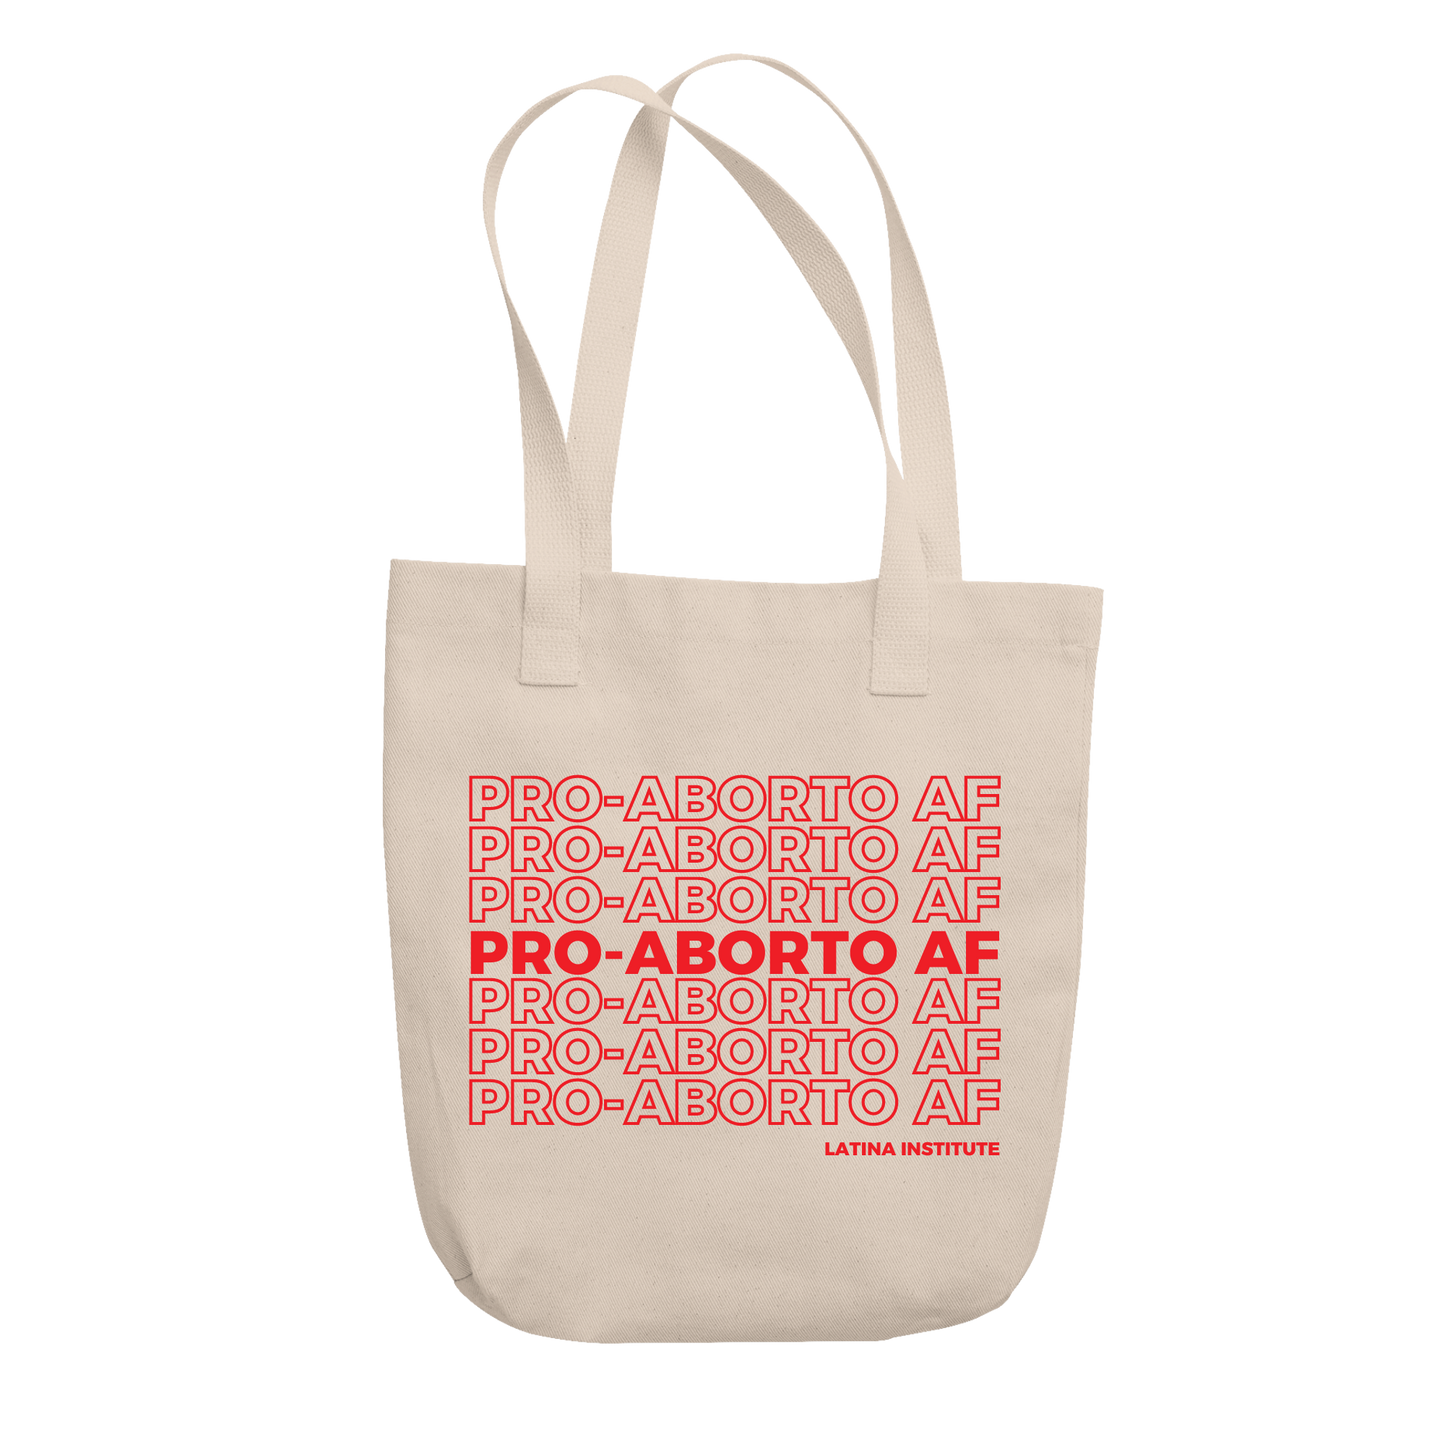 Pro-Aborto AF Tote